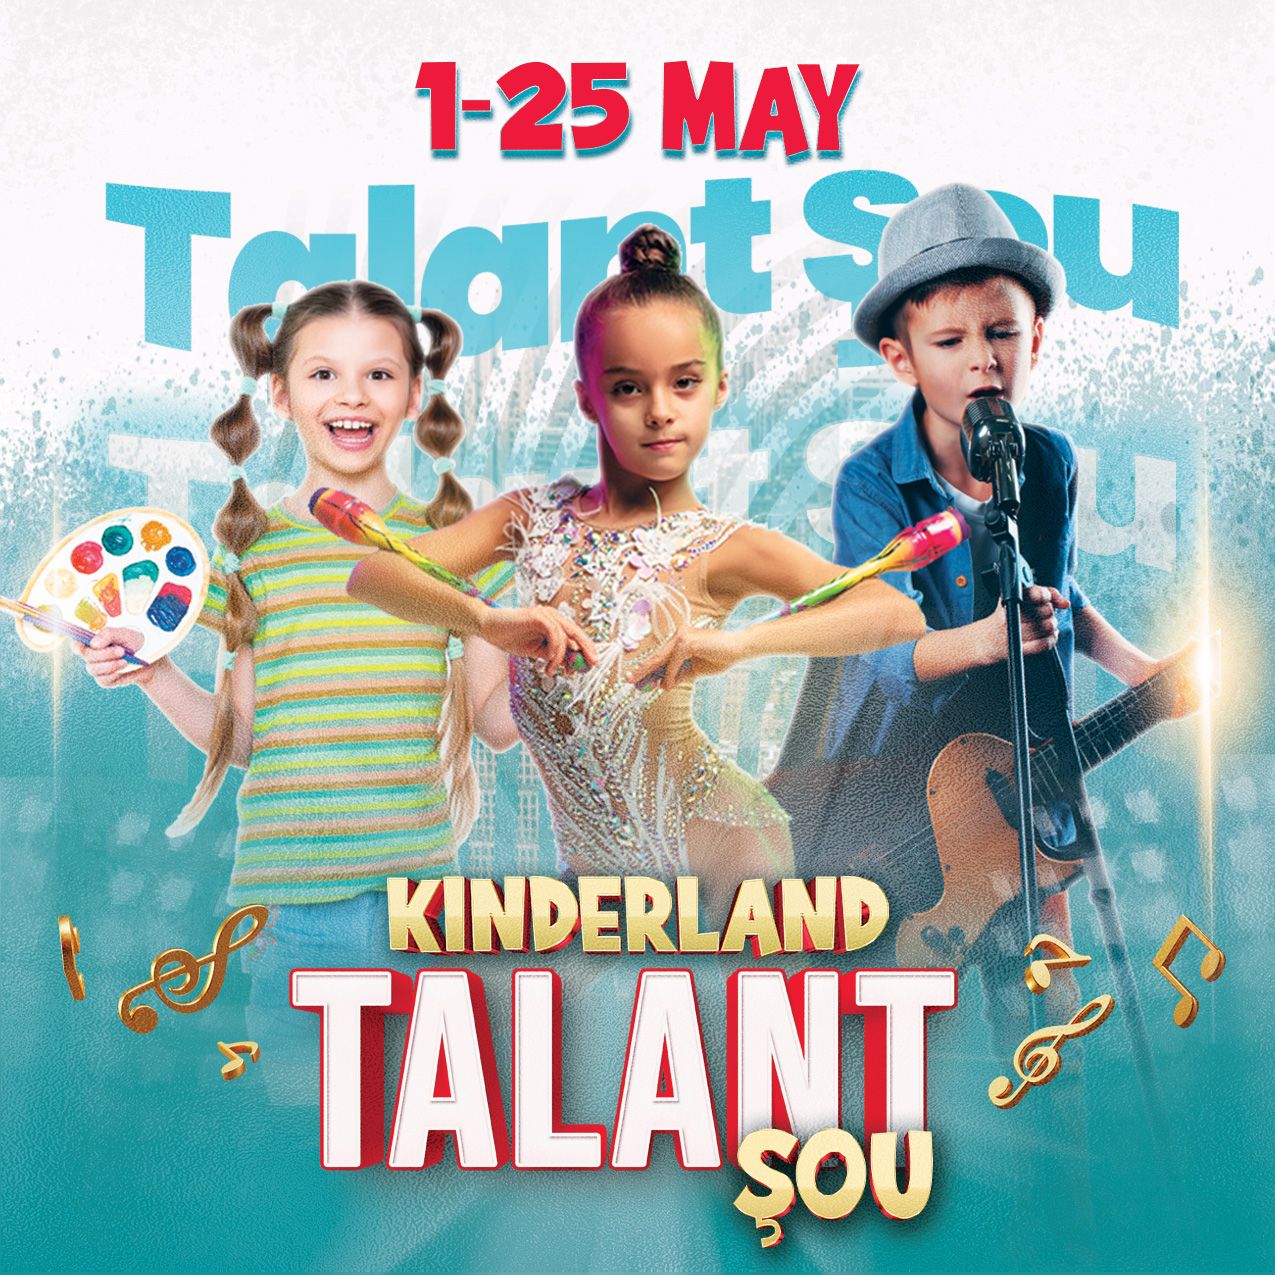 Talent Show in Kinderland!